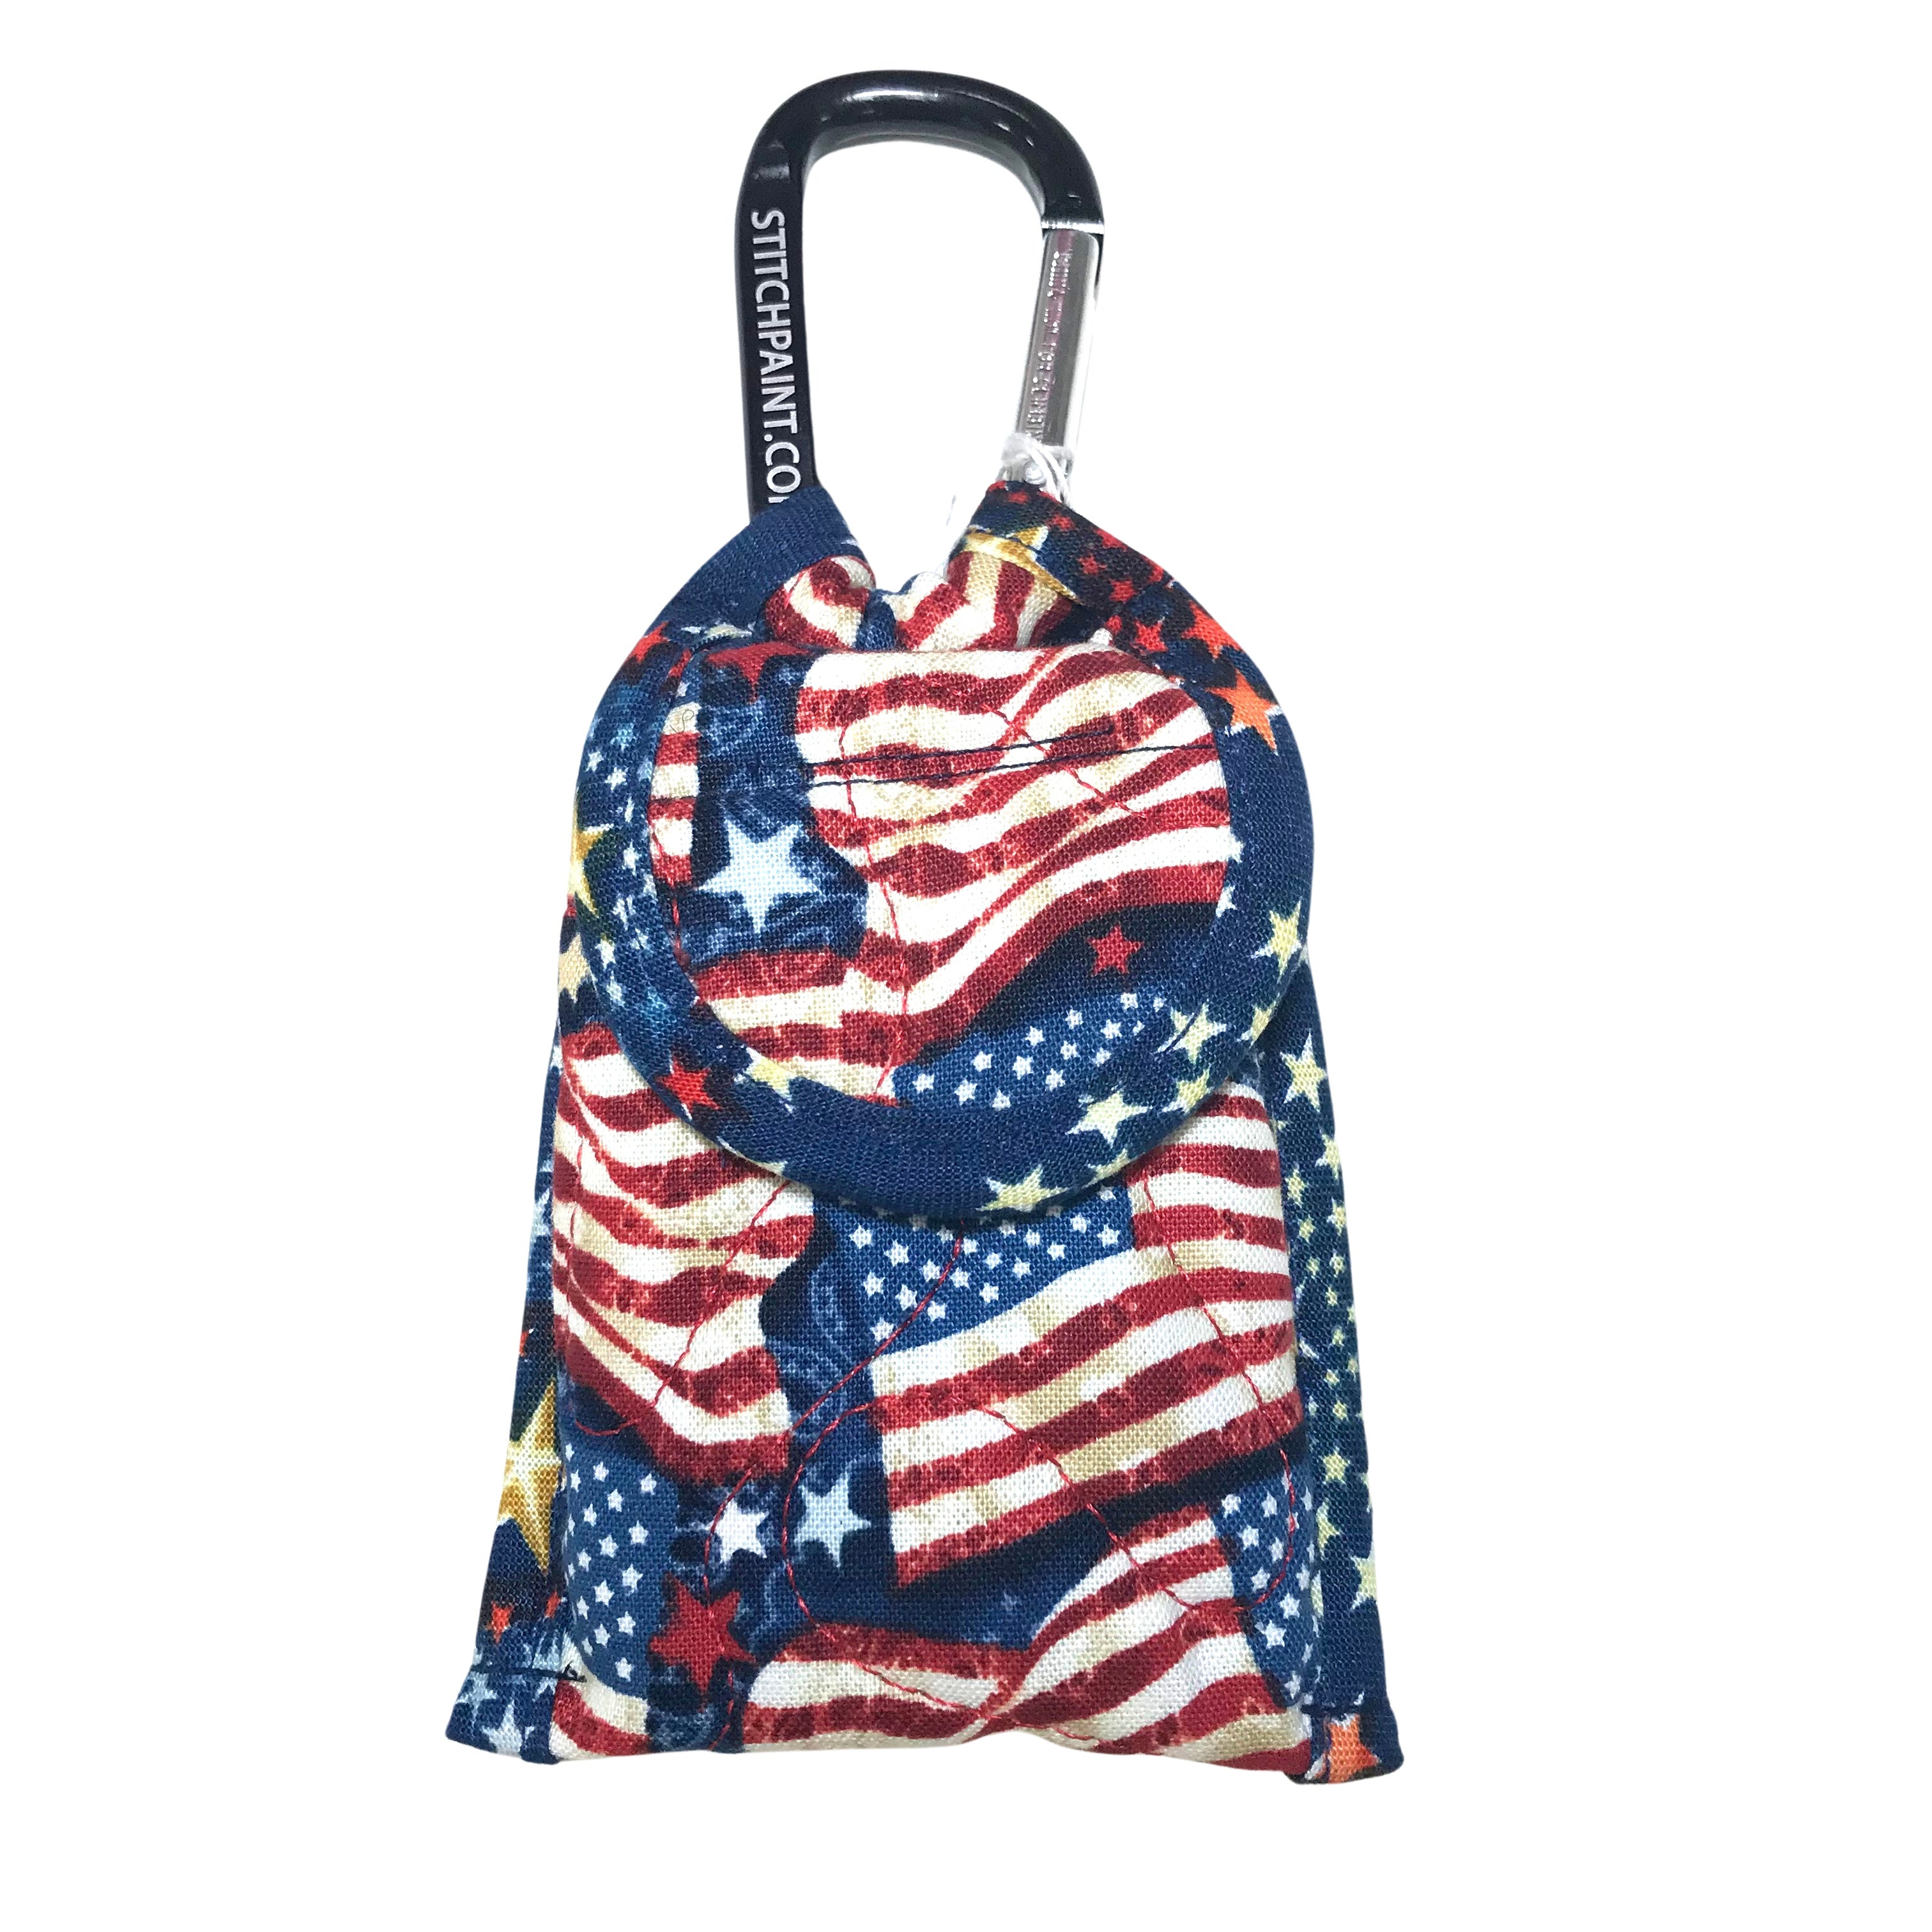 Itty Bitty Bag - American Flag